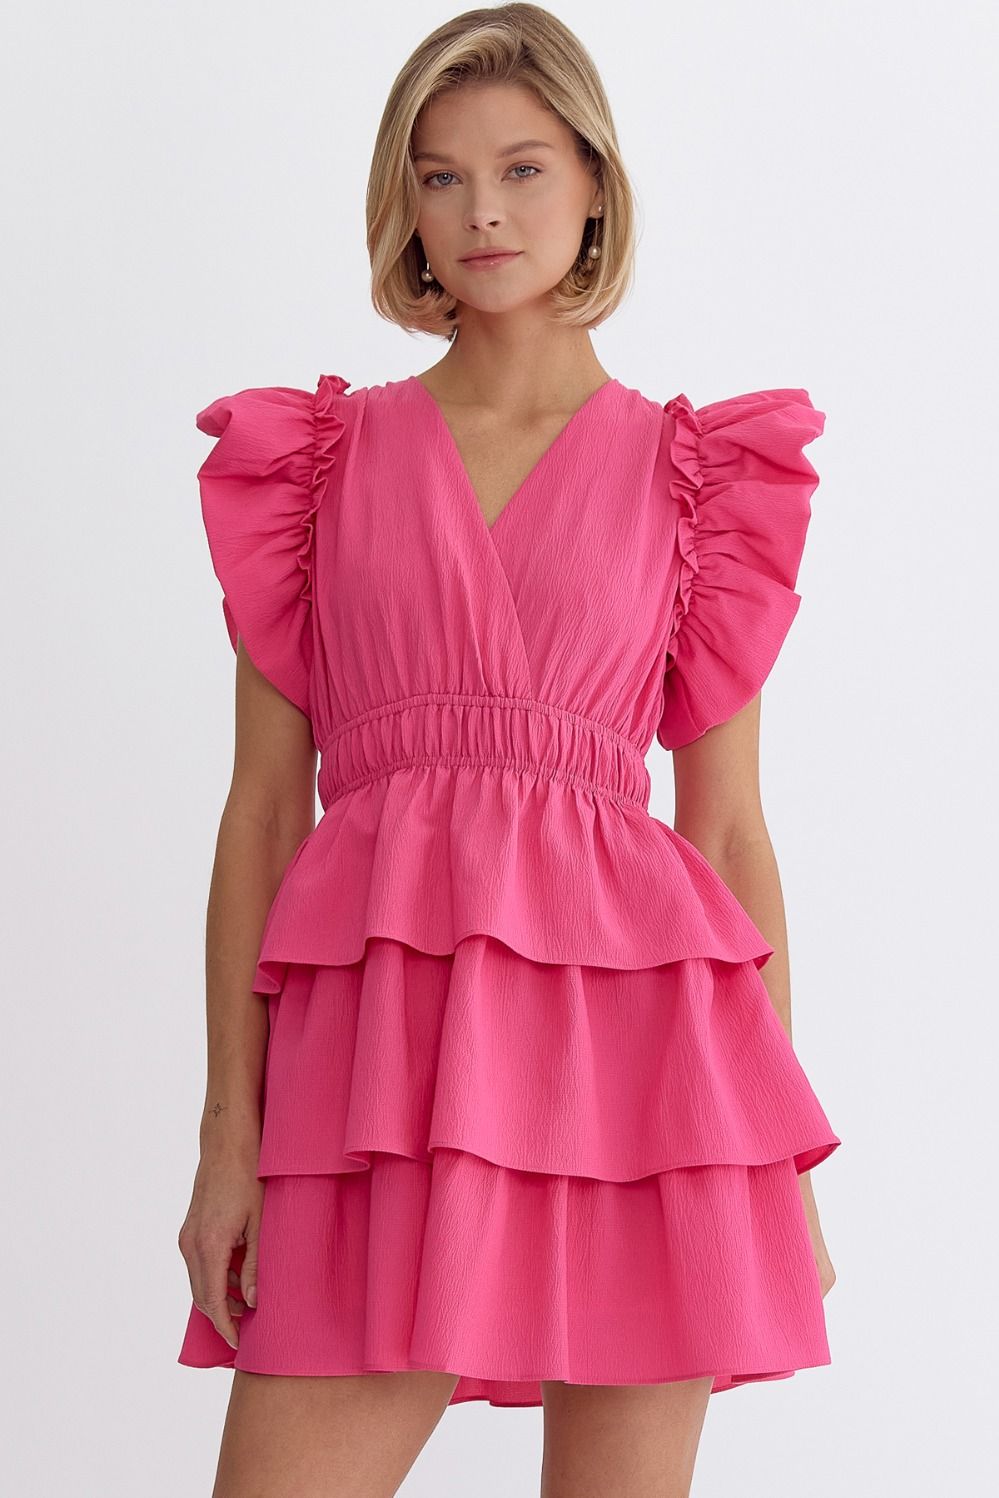 "Camellia" Pink Ruffled Dress